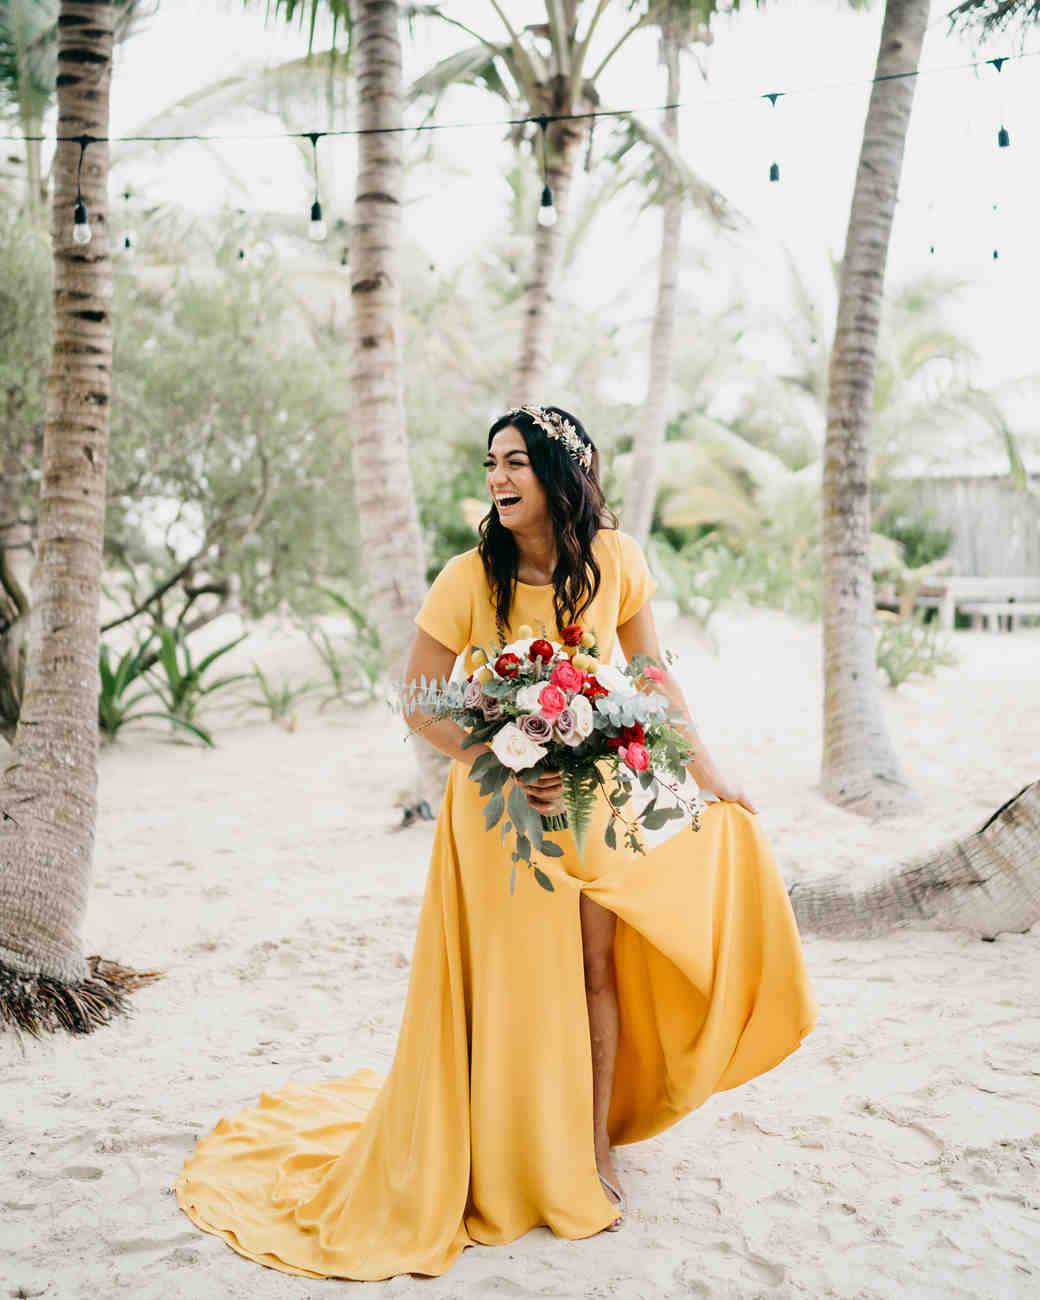 Vælg et gult brudekjole til et strandbryllup i boho-stil